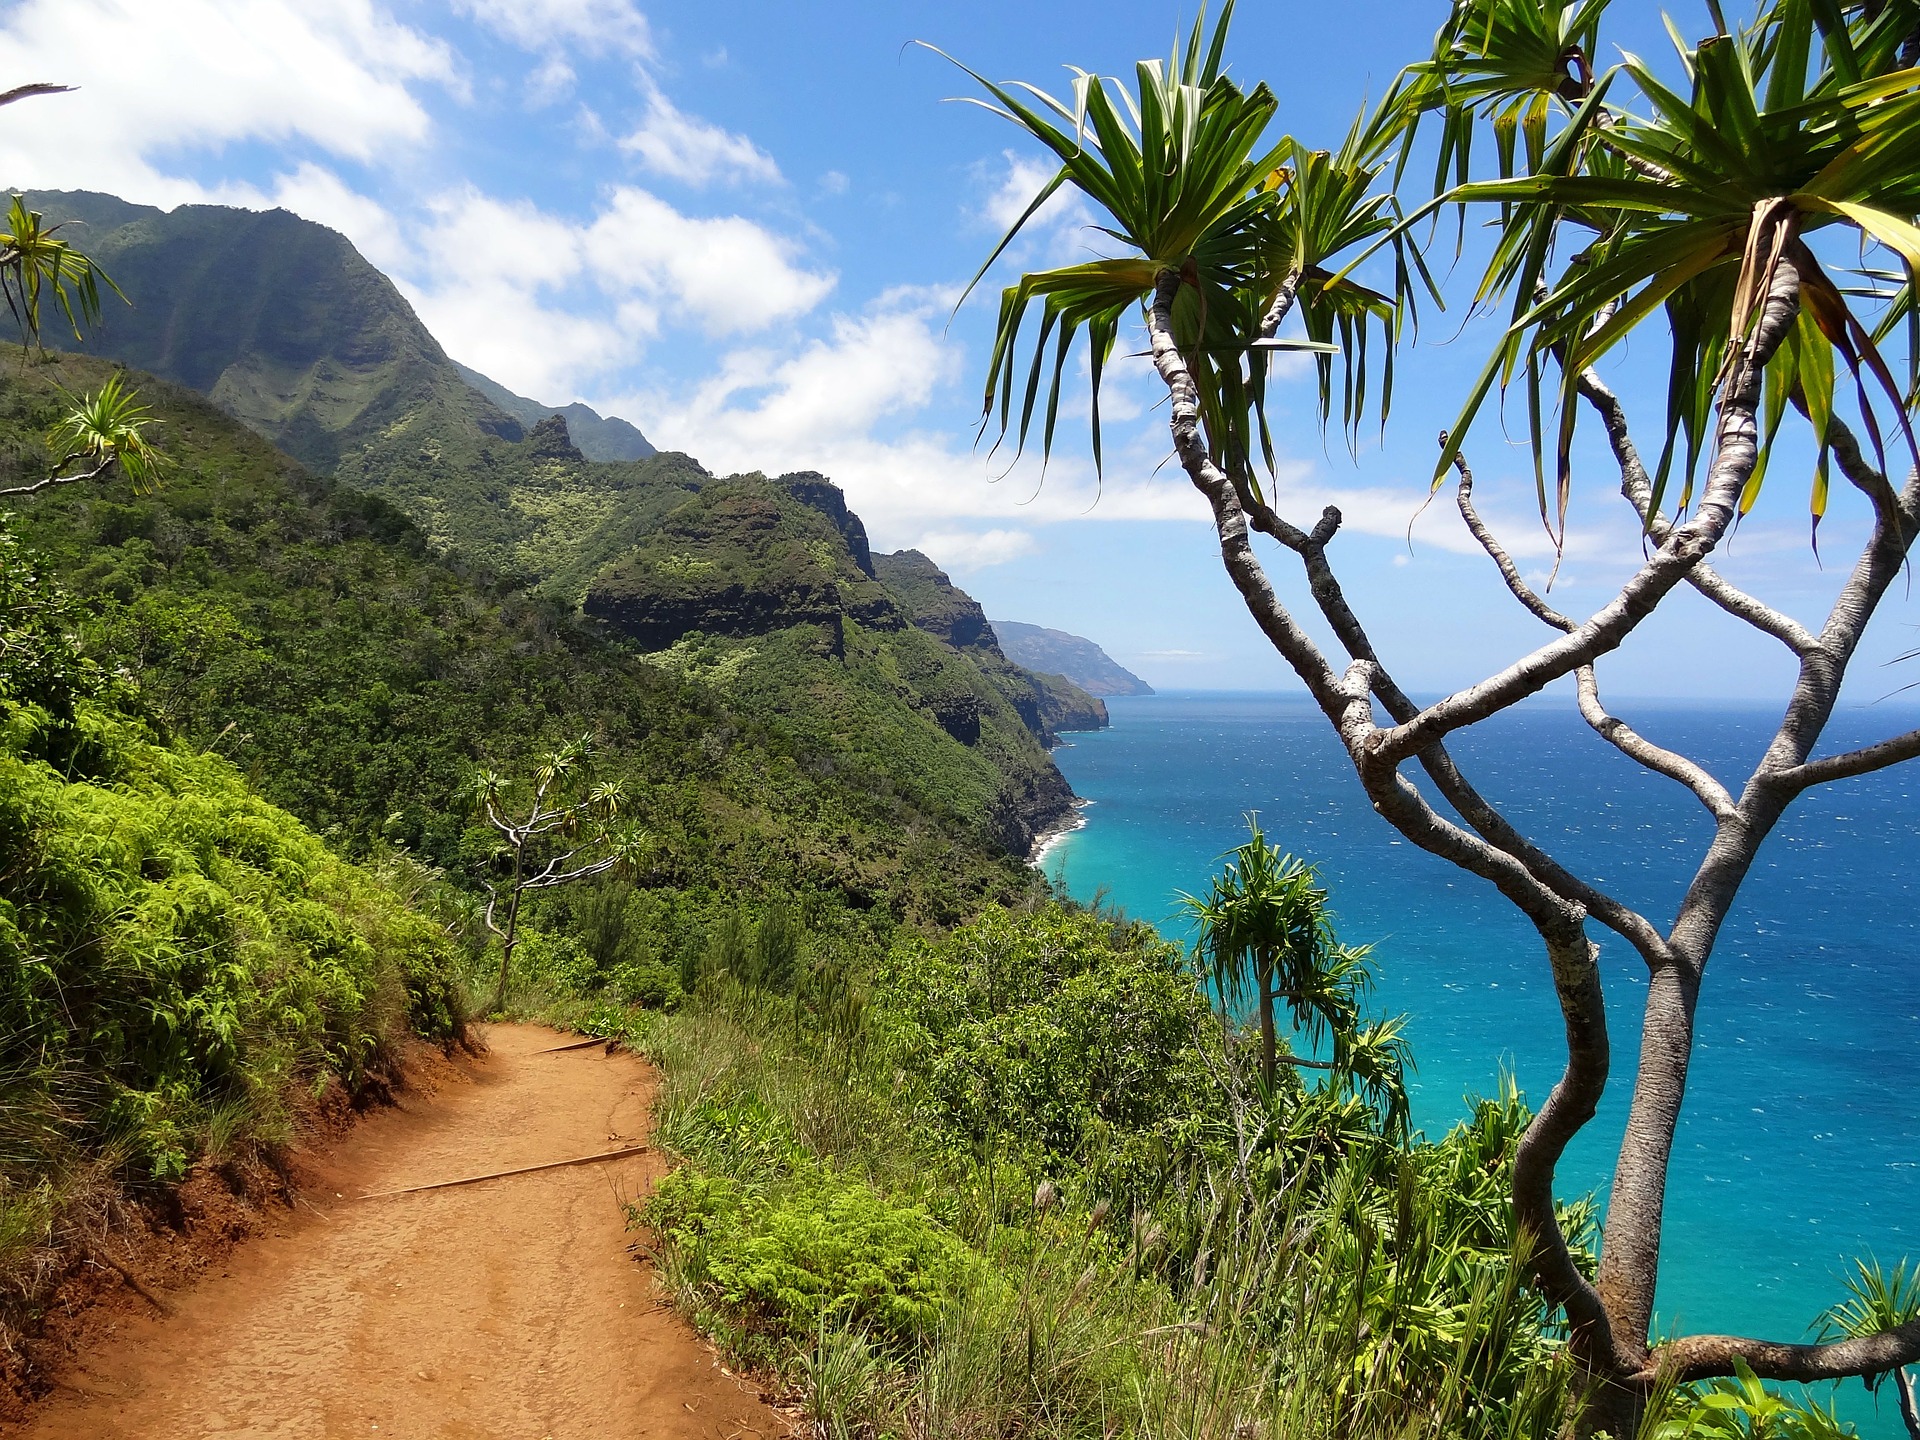 Hiking trail near your Kauai retreat with Premier Kauai.